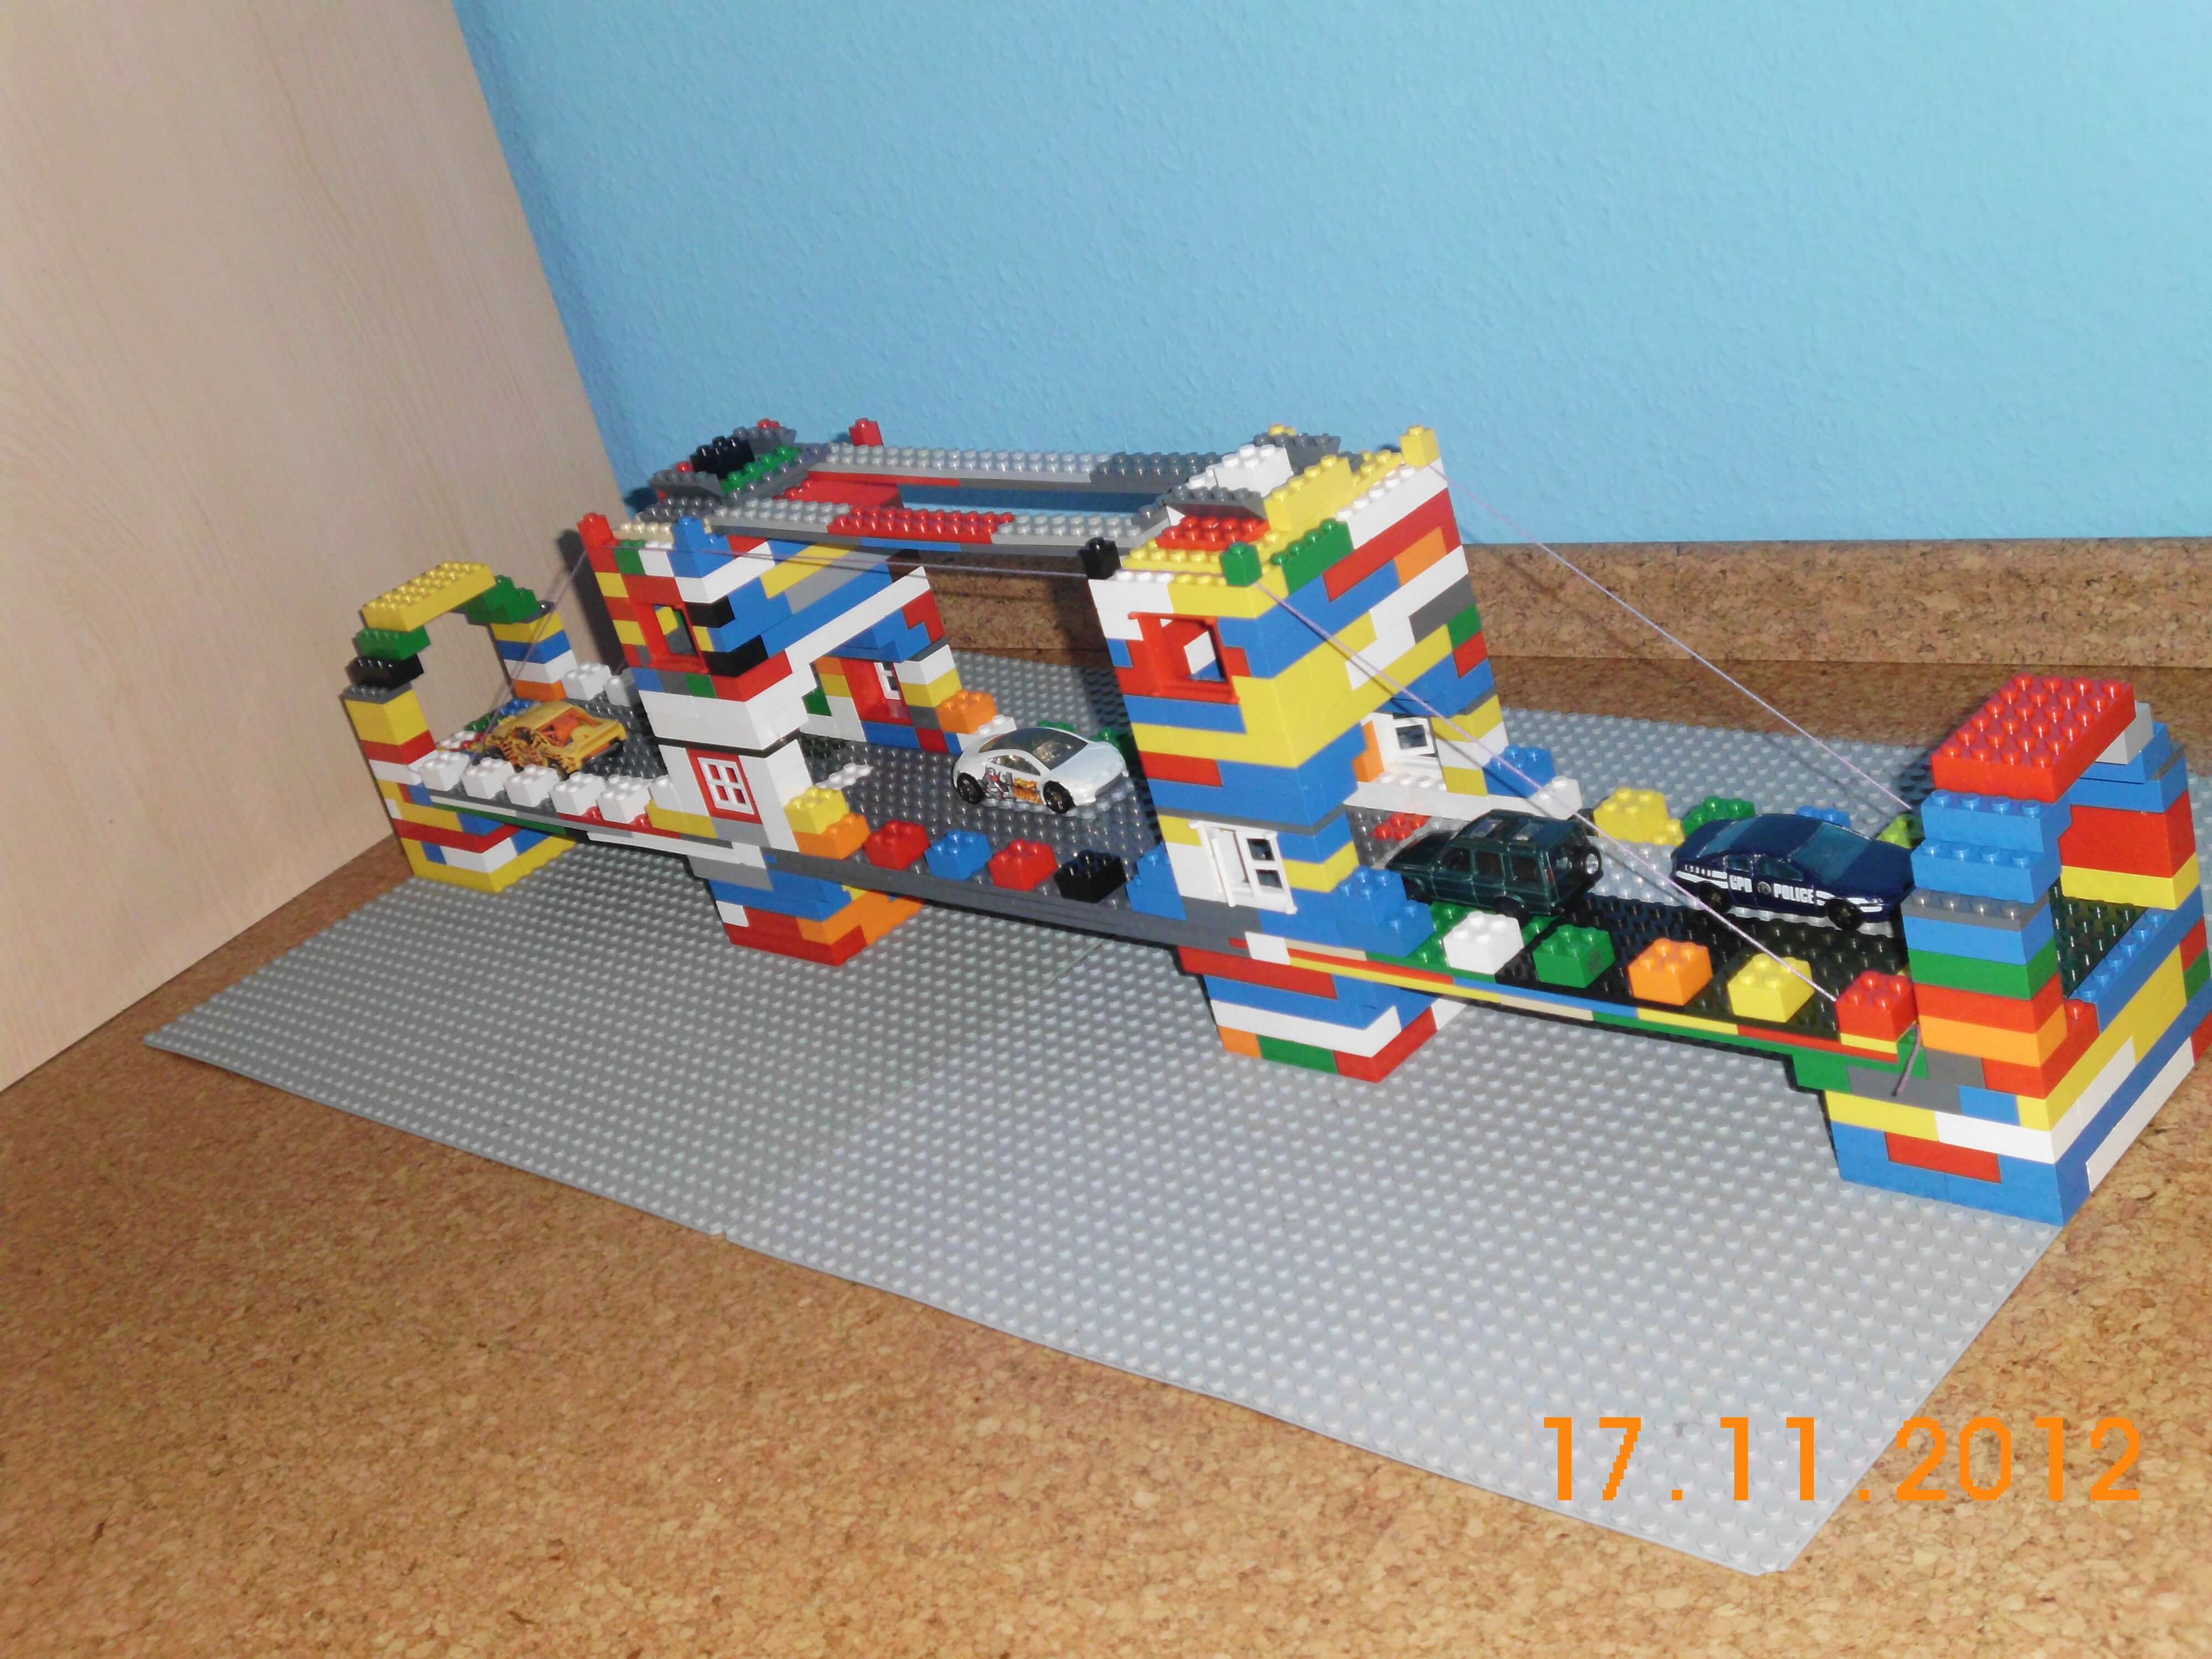 Bastelspass 3KG LEGO-Abenteuer für Kinderpartys und kreative Tage - e425f045-3997-463d-8f3b-e67a43bbc40b